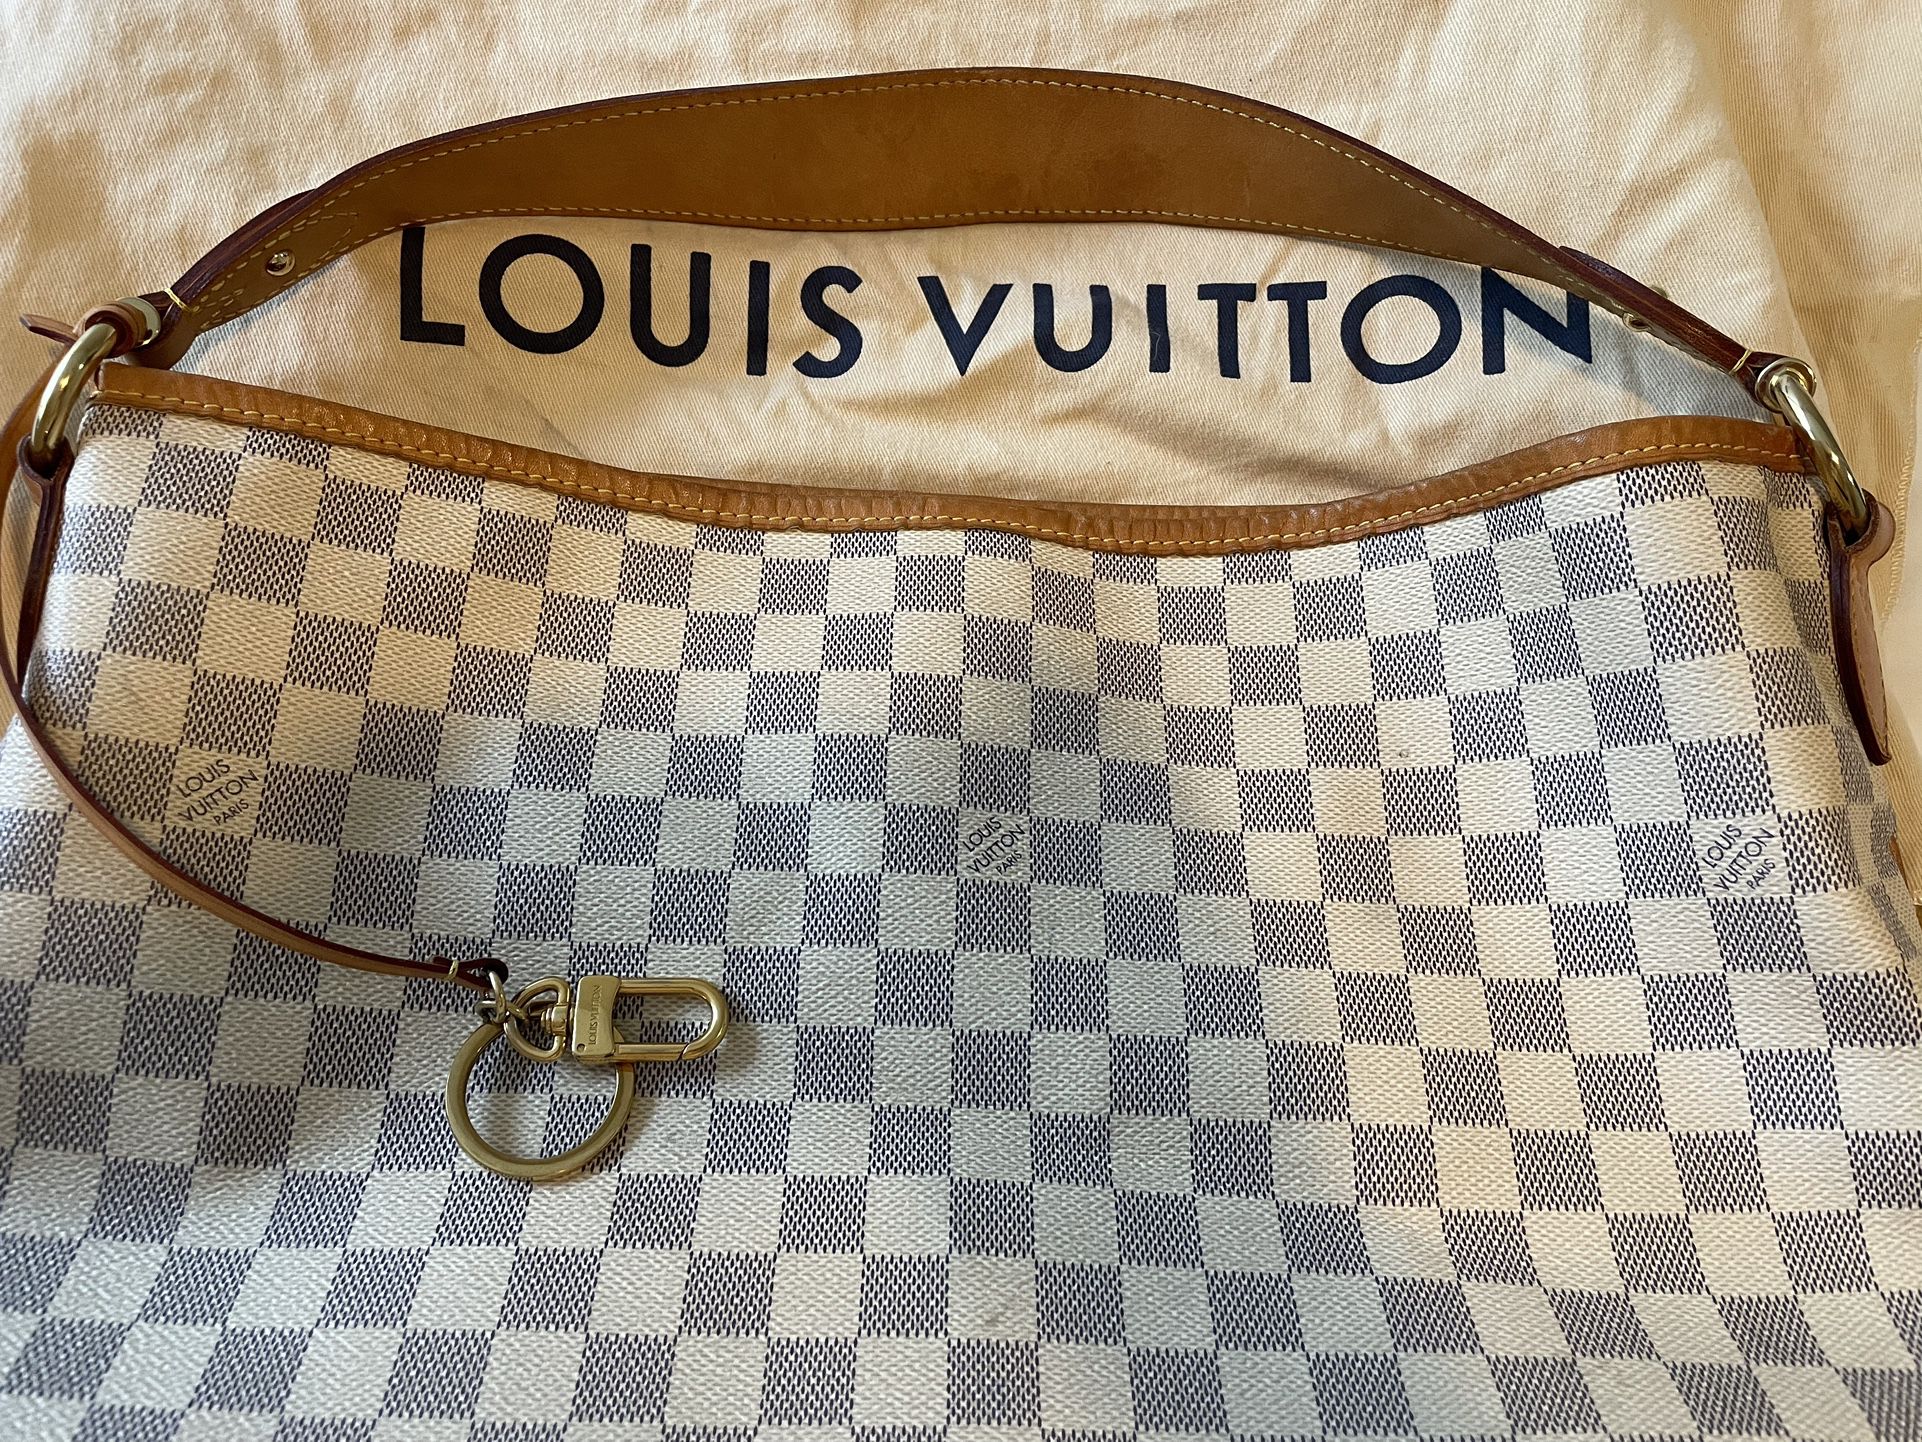 Louis Vuitton 3 Piece Purse for Sale in Miami, FL - OfferUp